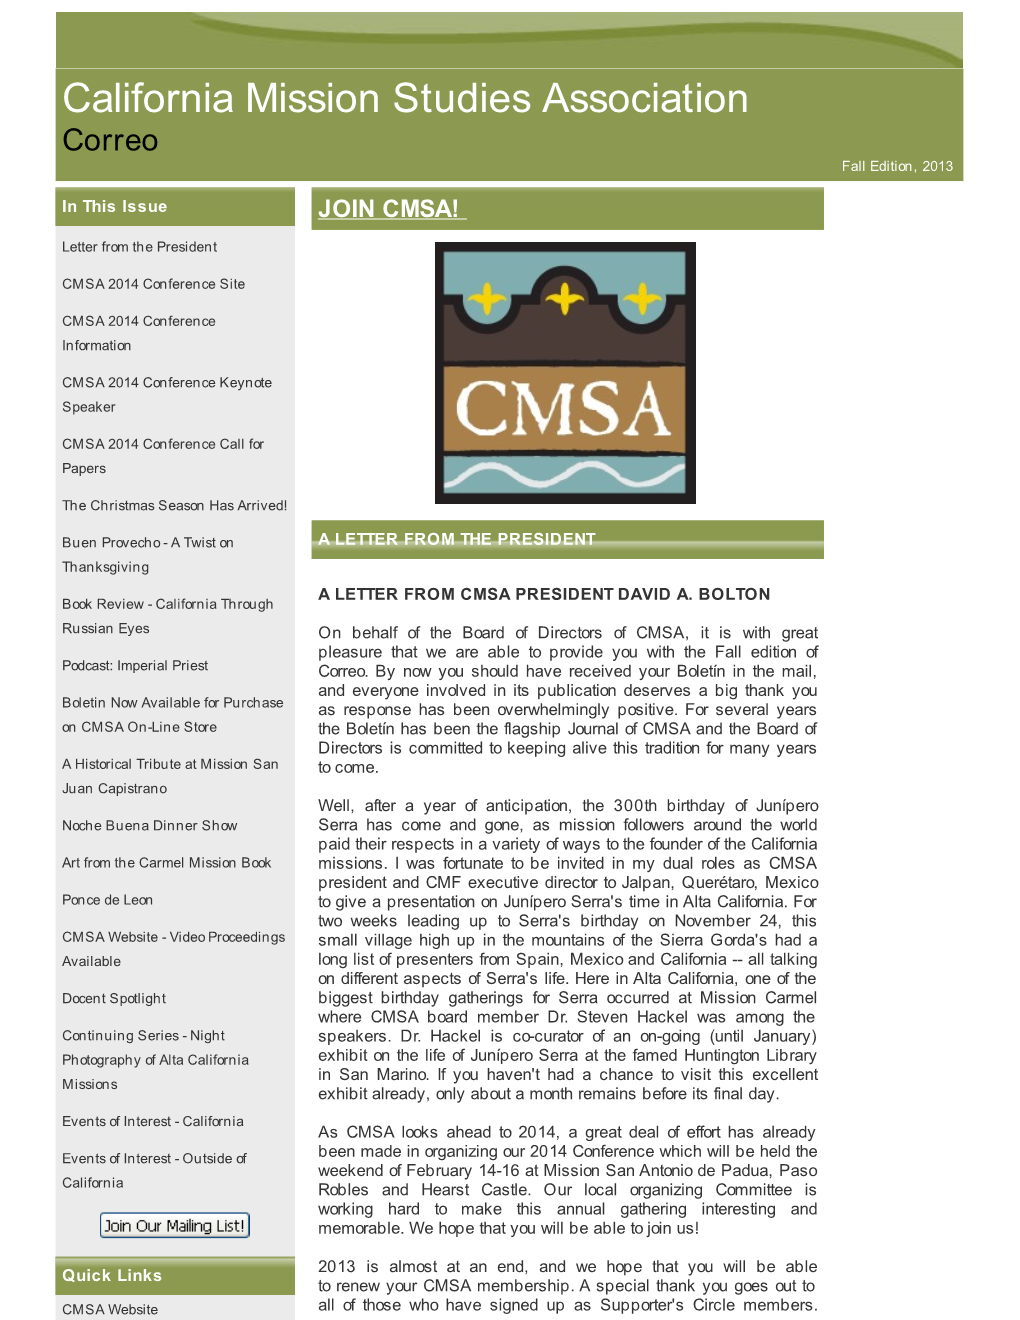 California Mission Studies Association Correo Fall Edition, 2013